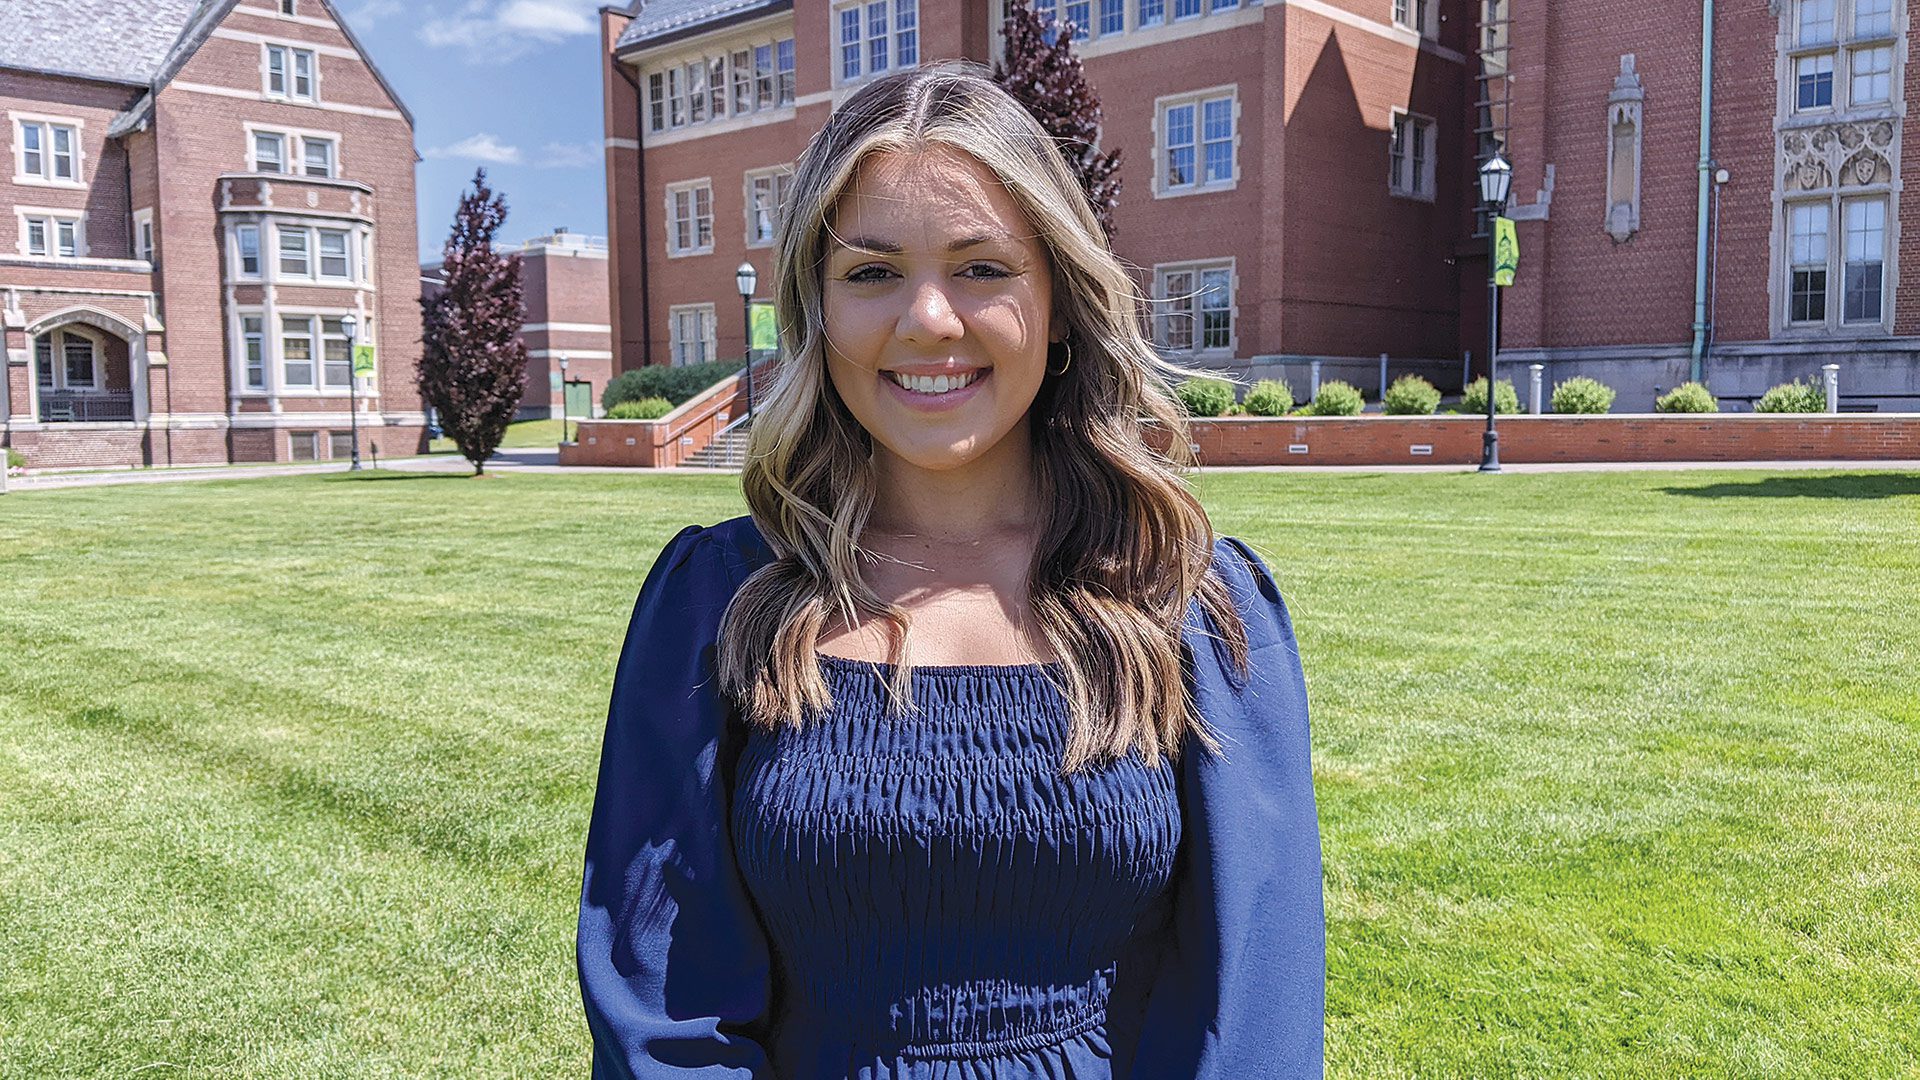 Ashley Girouard is gaining experience through Baystate’s SNAP program for new nurses.